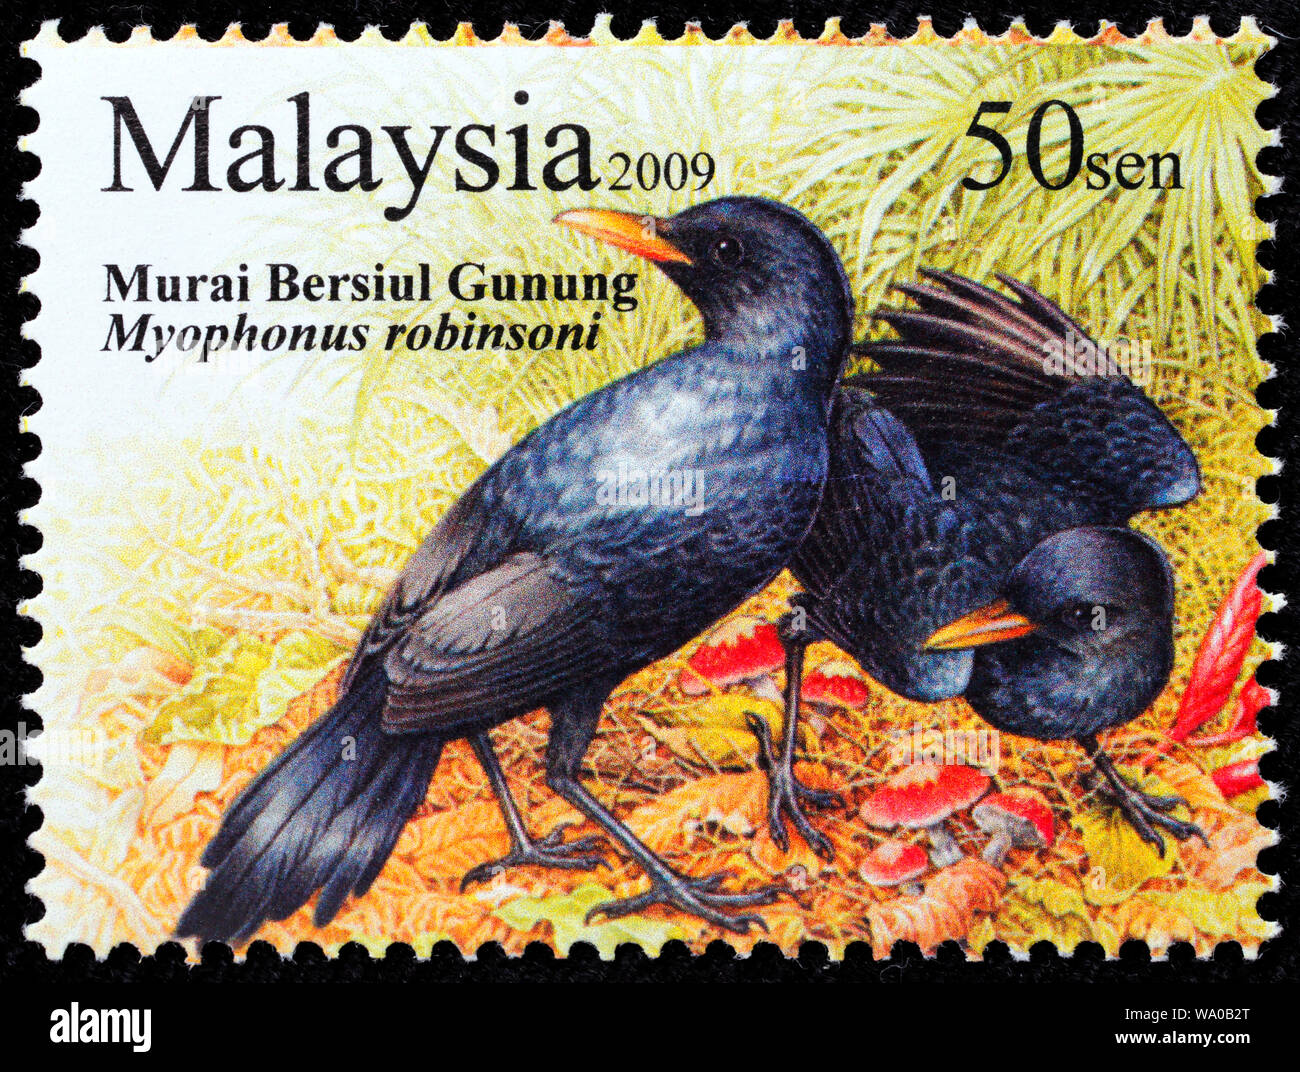 Malaysian Whistling Thrush, Myophonus robinsoni, postage stamp, Malaysia, 2009 Stock Photo